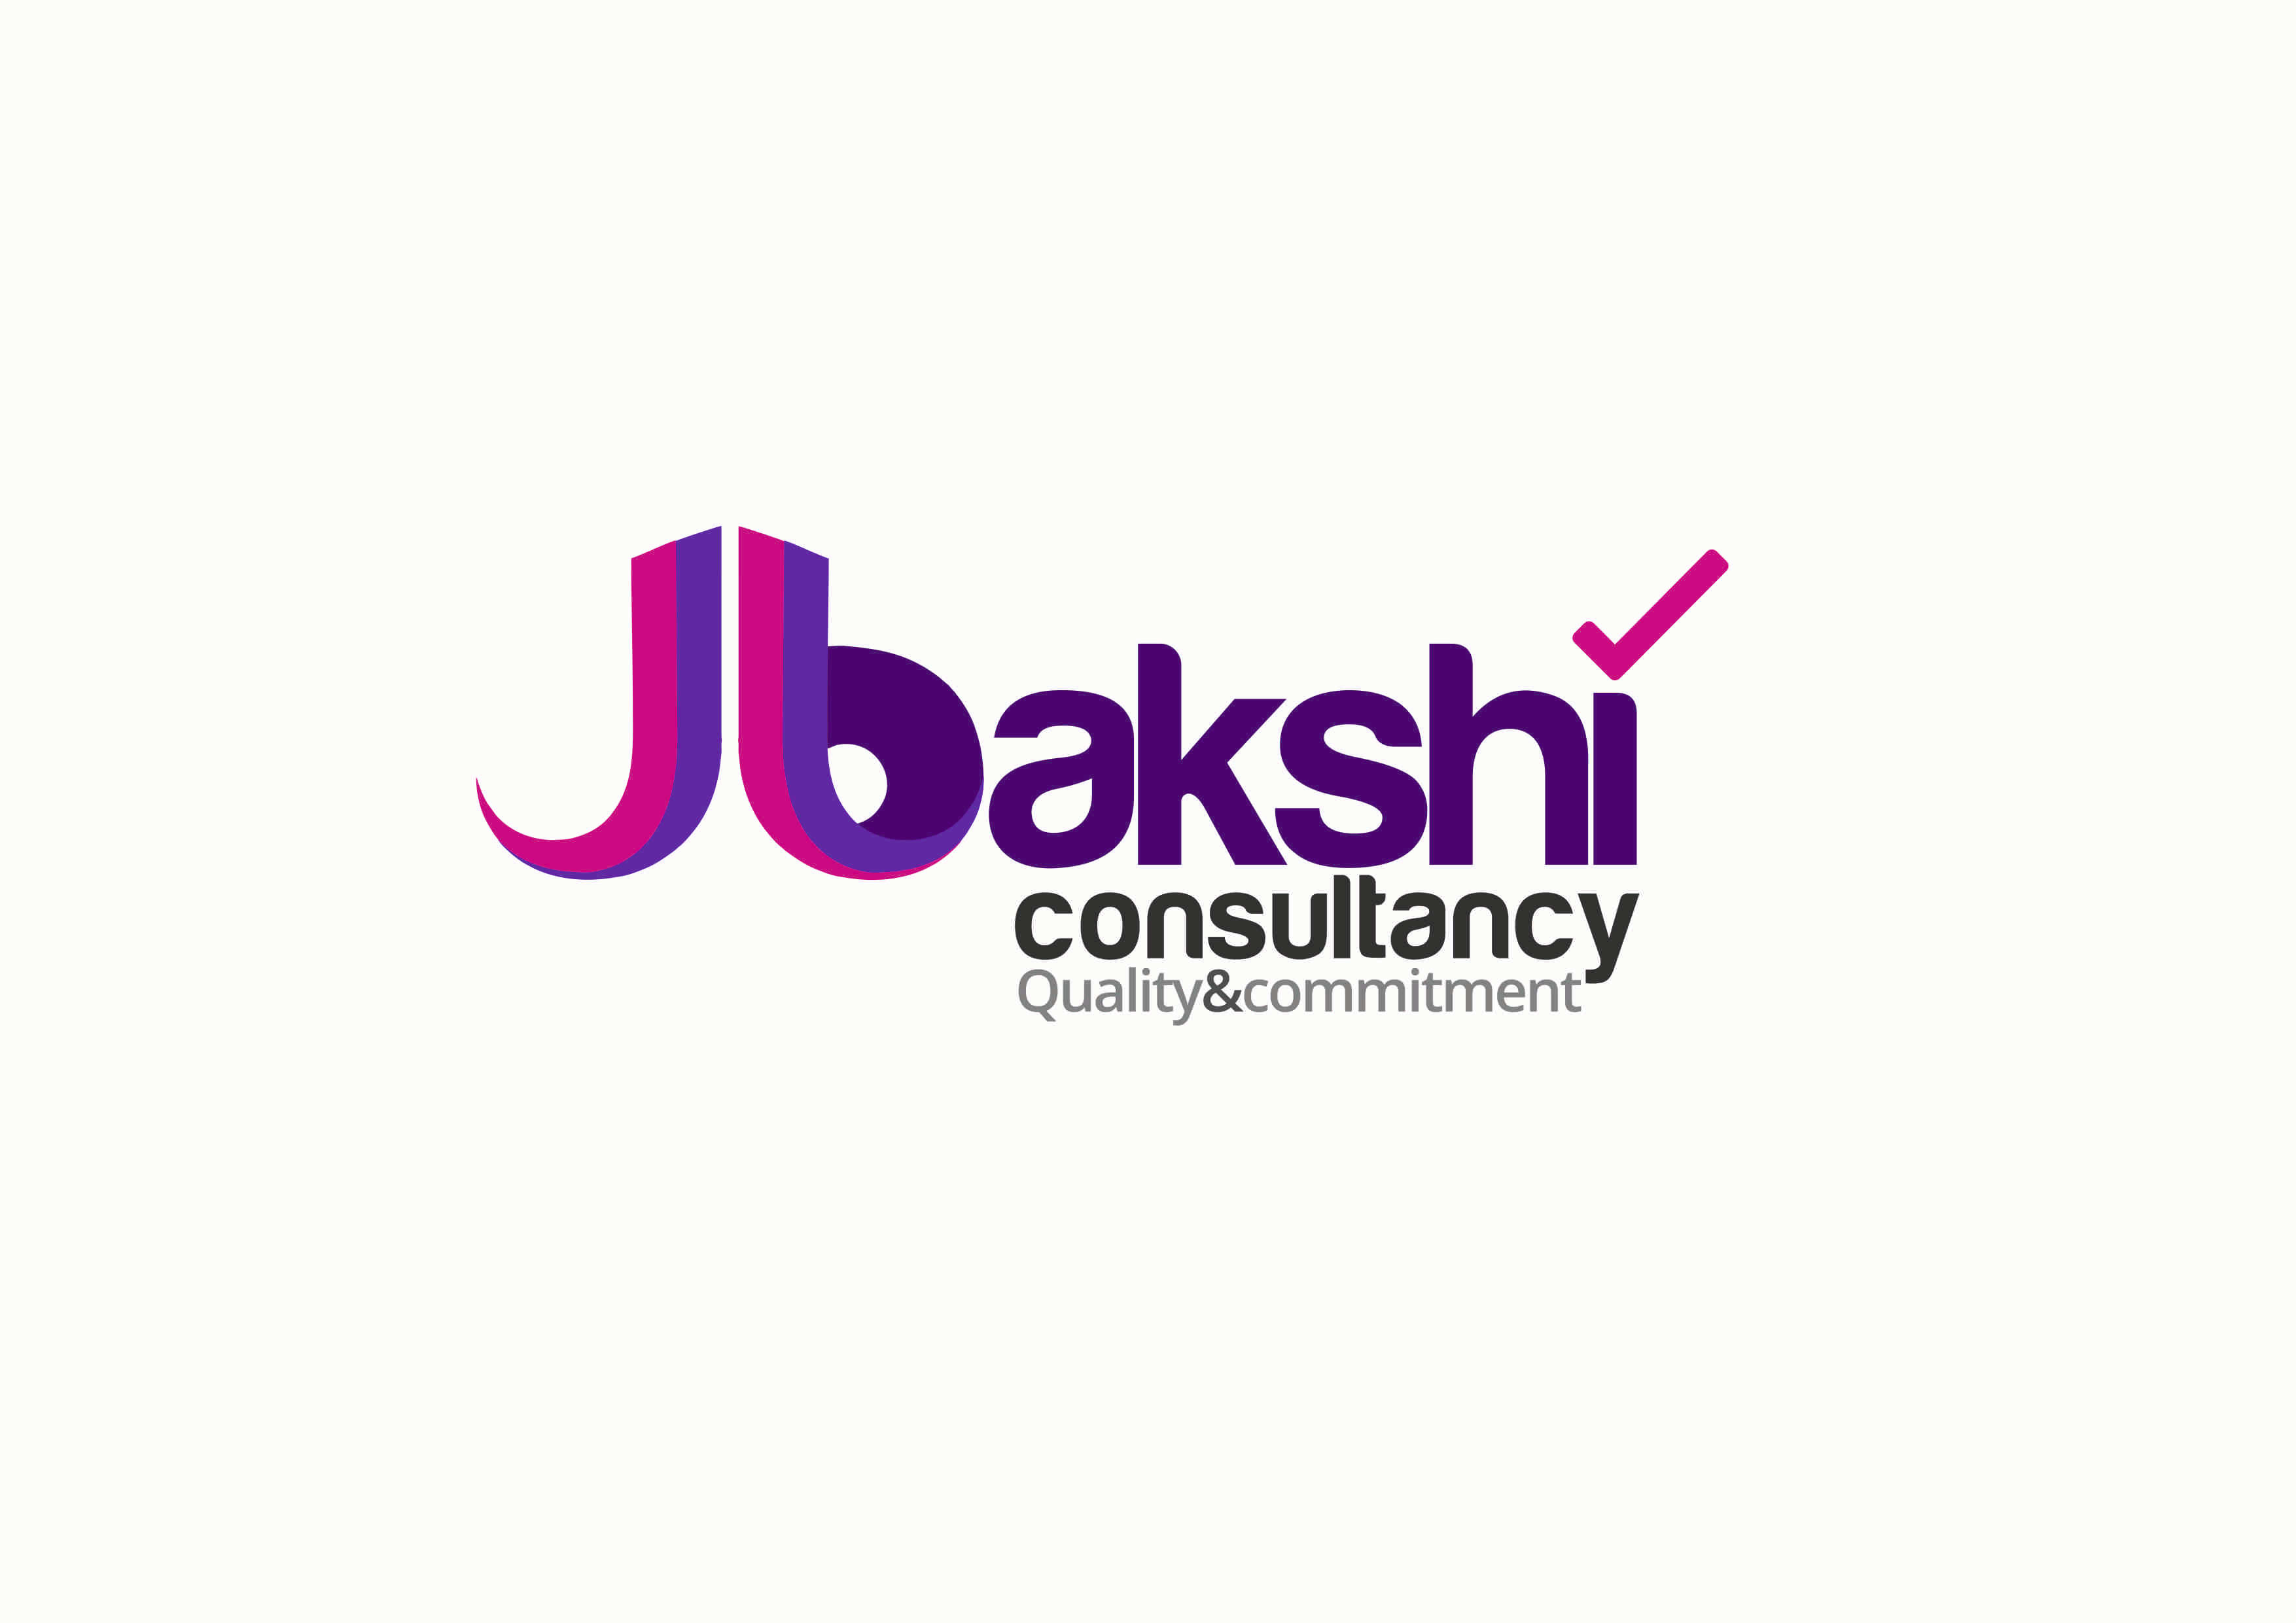 J Bakshi Consultancy